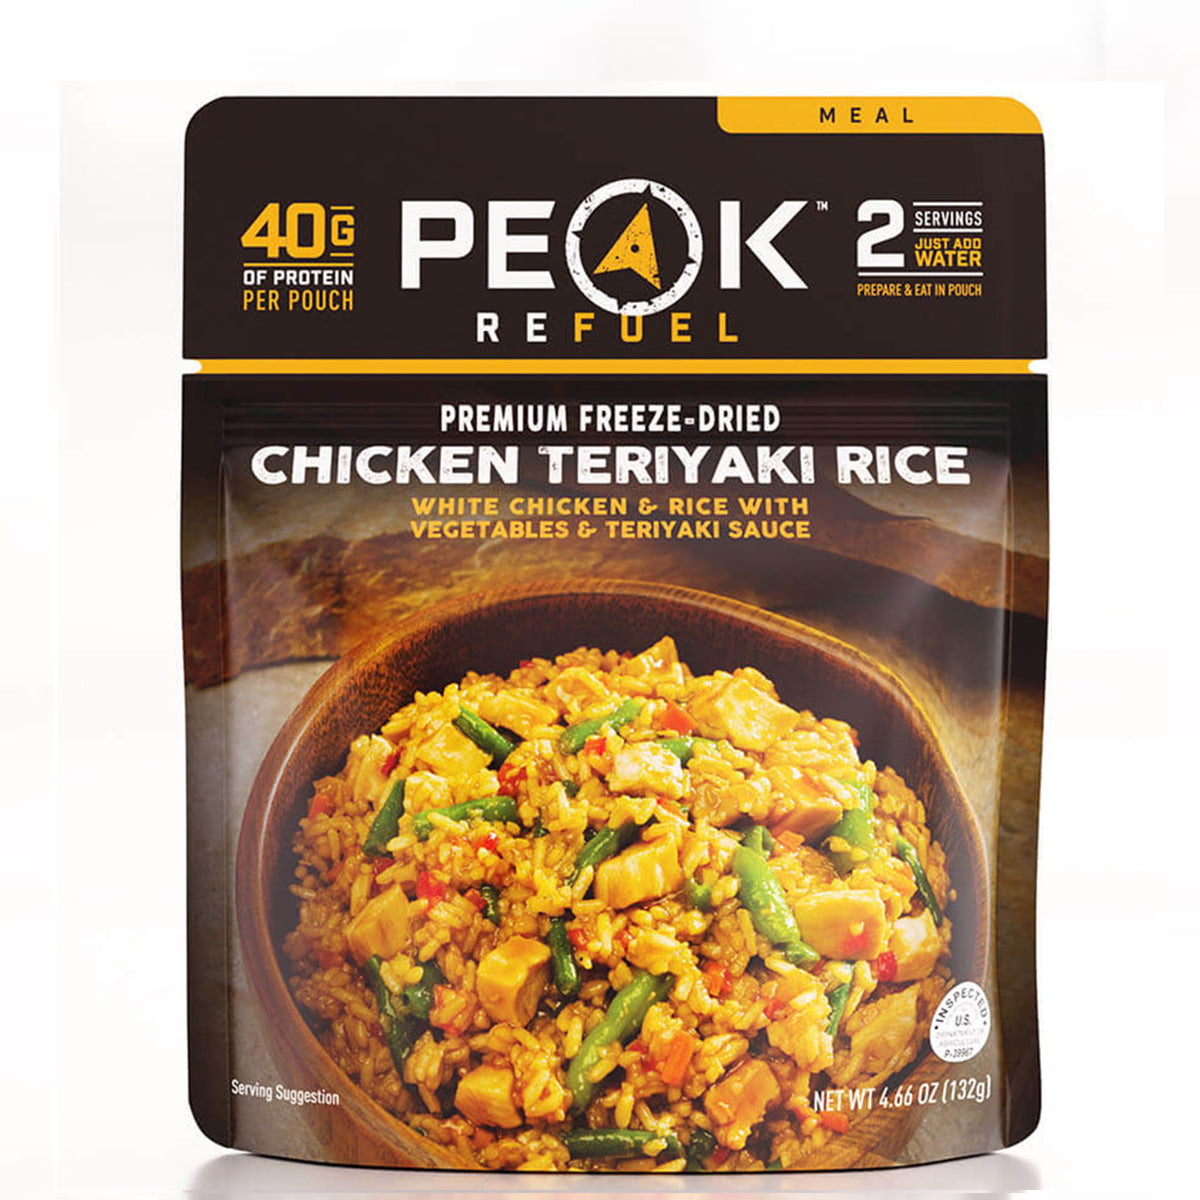 Peak Refuel Chicken Teriyaki & Rice in Peak Refuel Chicken Teriyaki & Rice by Peak Refuel | Camping - goHUNT Shop by GOHUNT | Peak Refuel - GOHUNT Shop